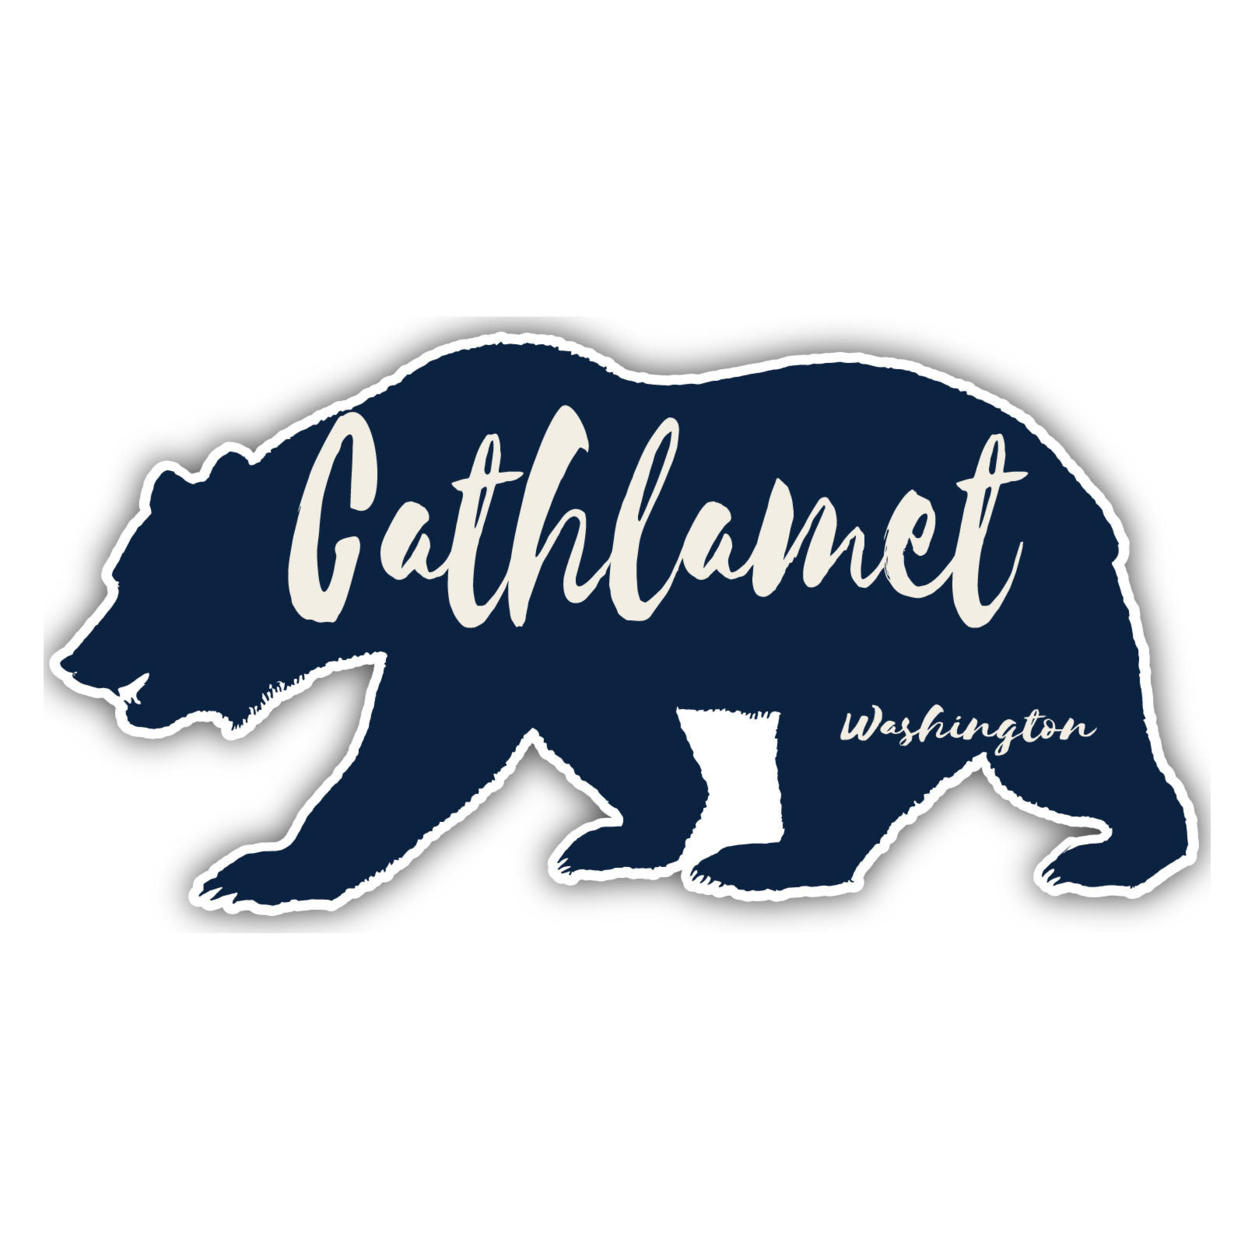 Cathlamet Washington Souvenir Decorative Stickers (Choose Theme And Size) - Single Unit, 6-Inch, Bear